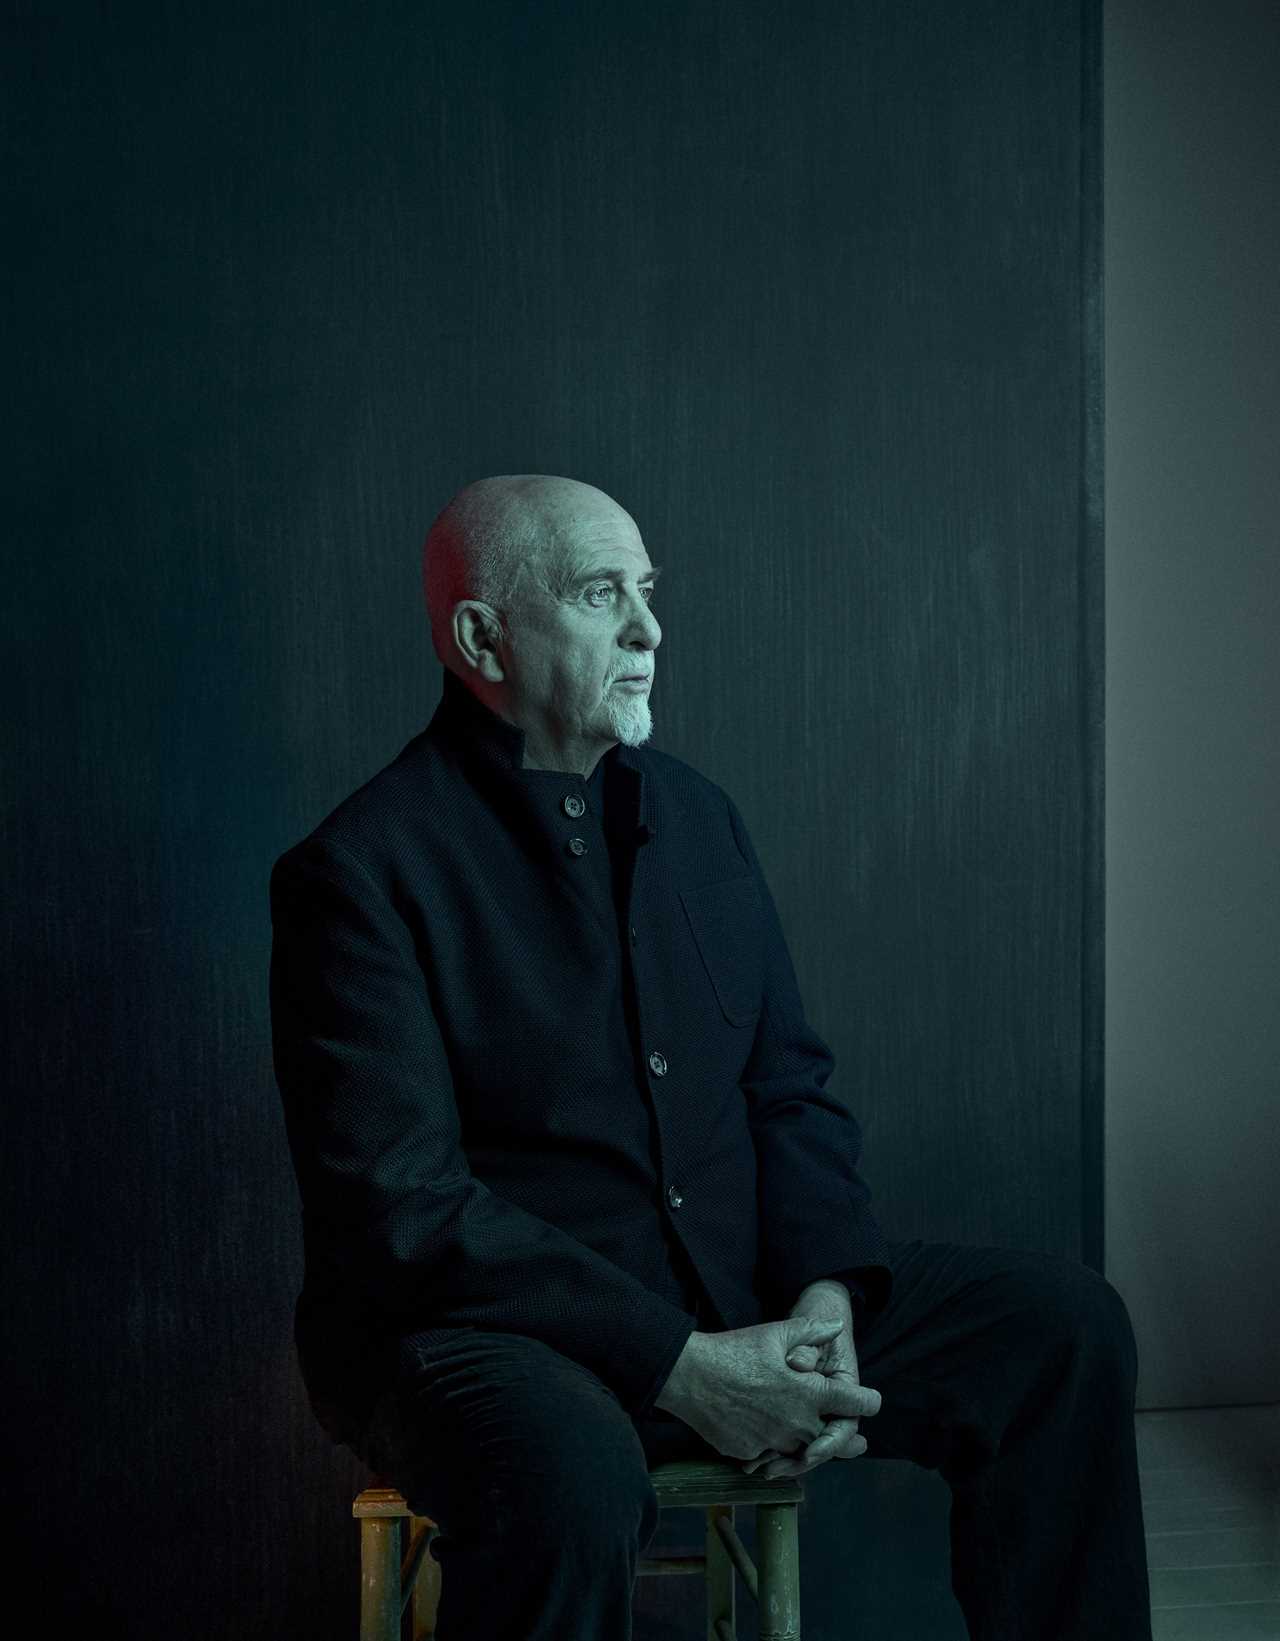 Genesis rocker Peter Gabriel embraces mortality with new album release